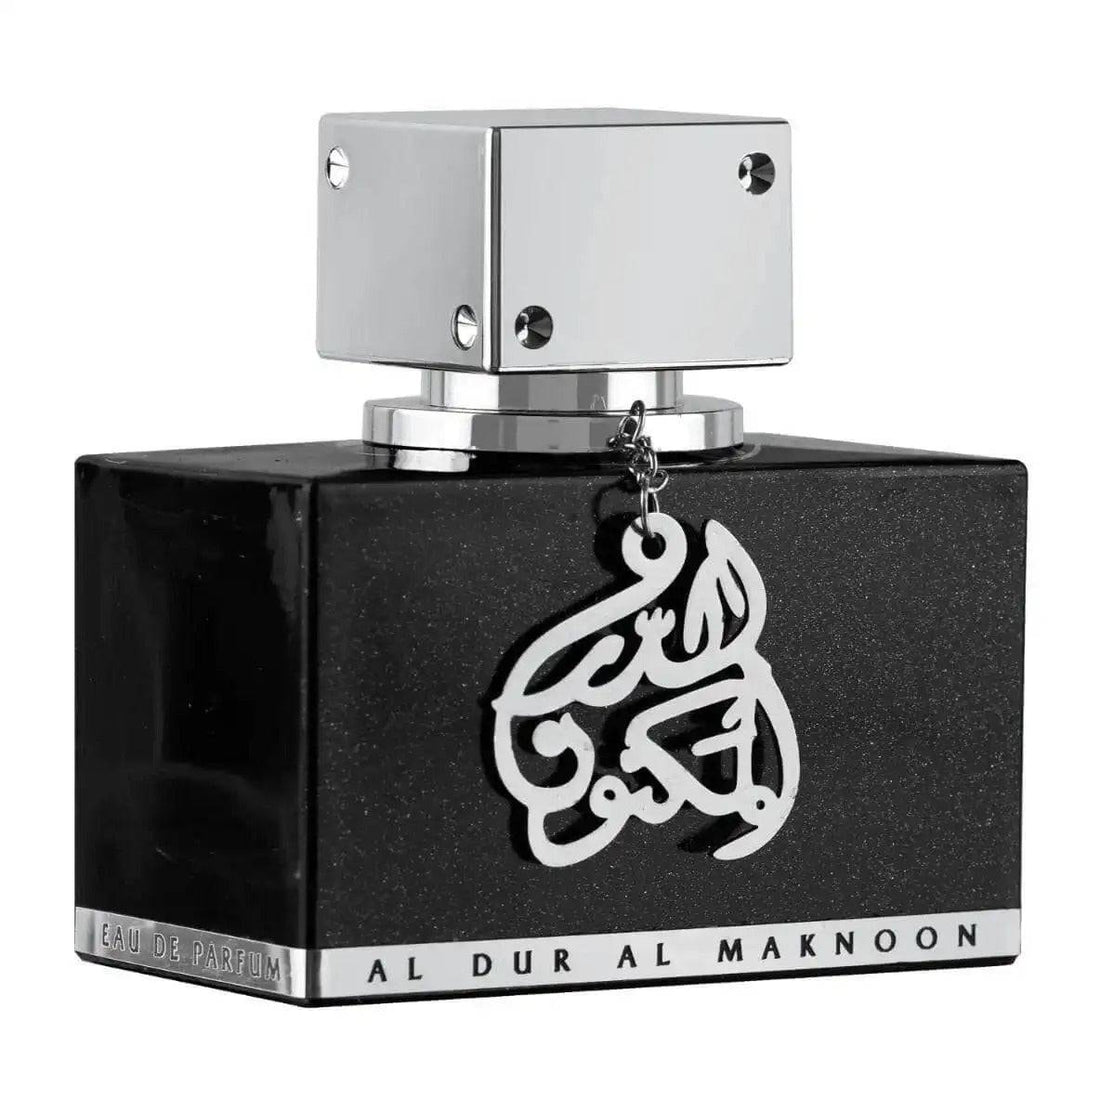 Beautifully designed glass bottle of the unisex Arabian perfume spray, Al Dur Al Maknoon, by Lattafa